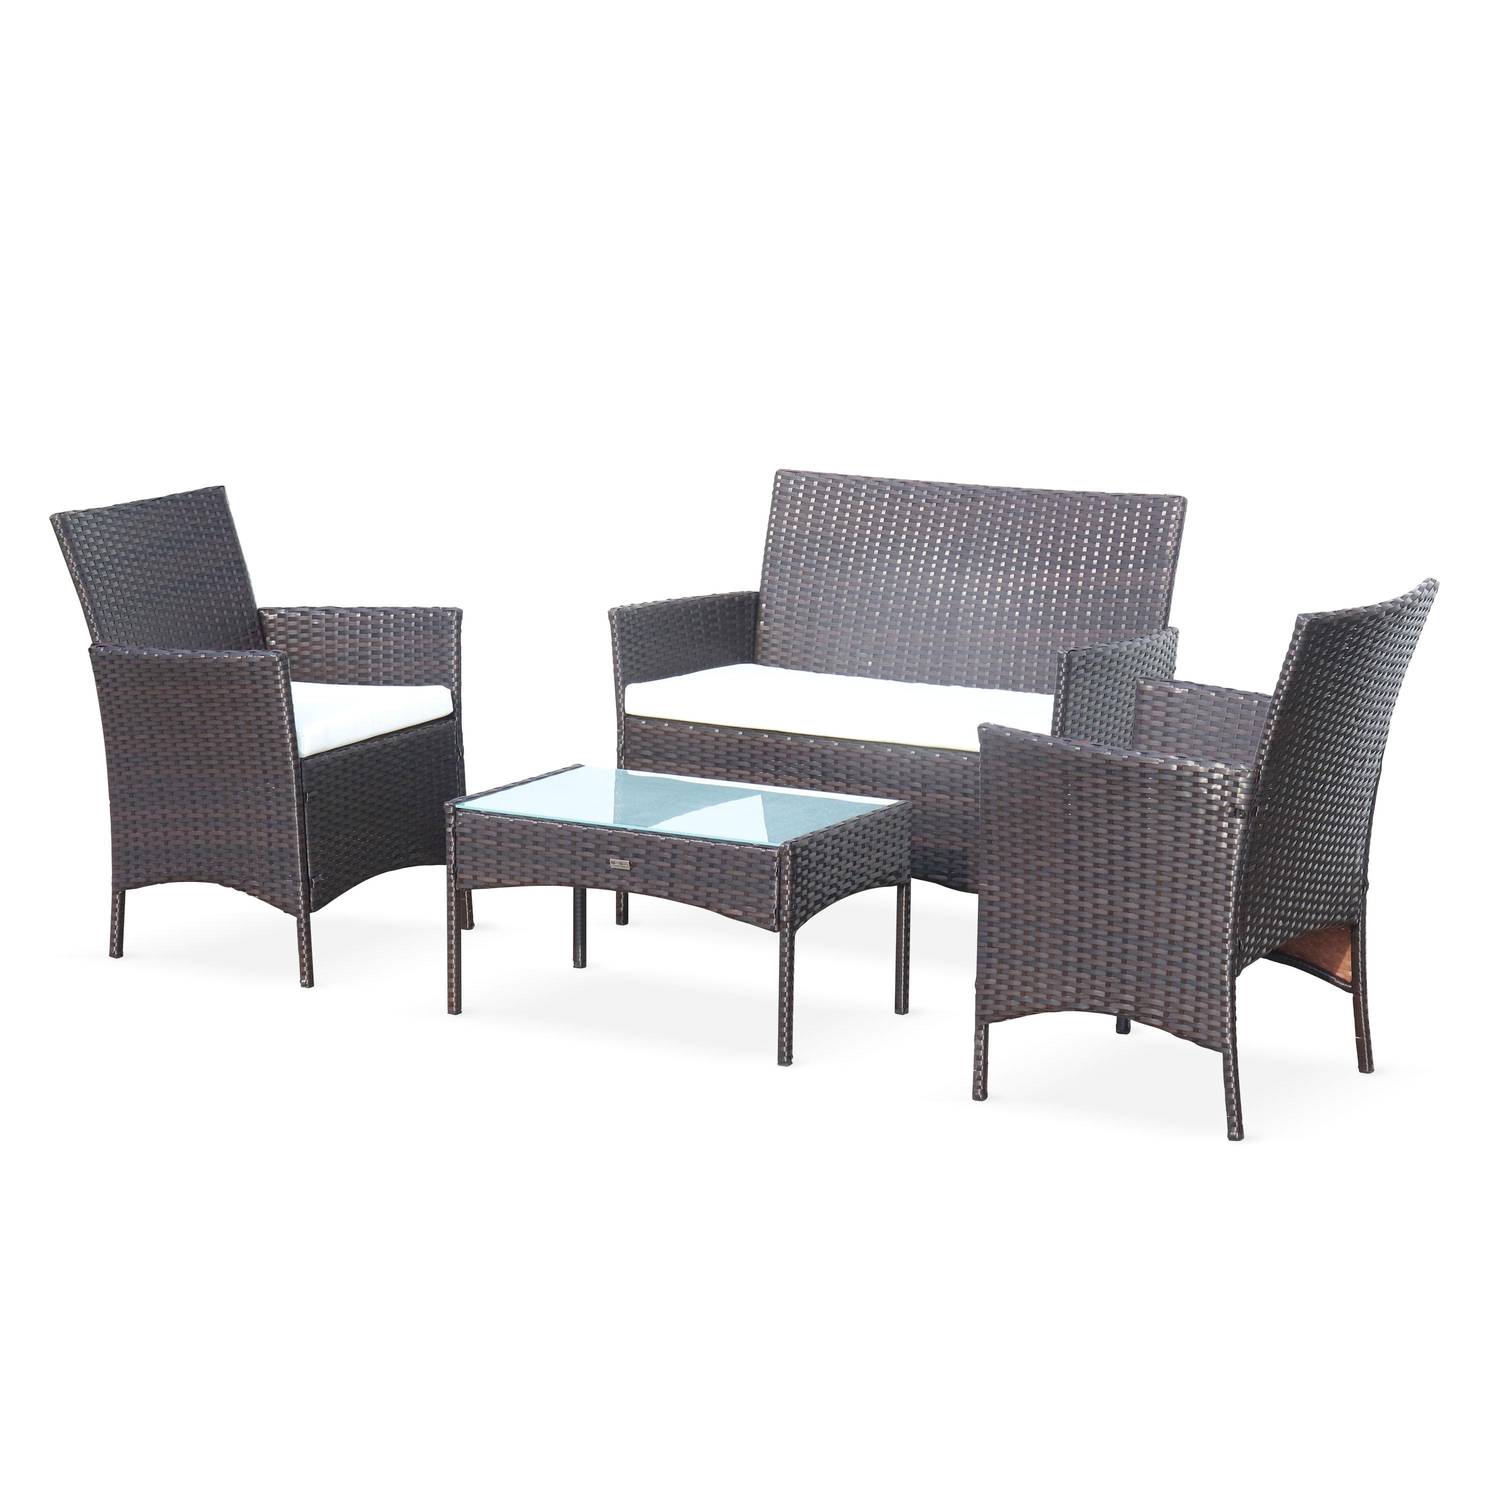 4-seater polyrattan garden sofa set - sofa, 2 armchairs, coffee table - Moltes - Brown rattan, Off-white cushions Photo2